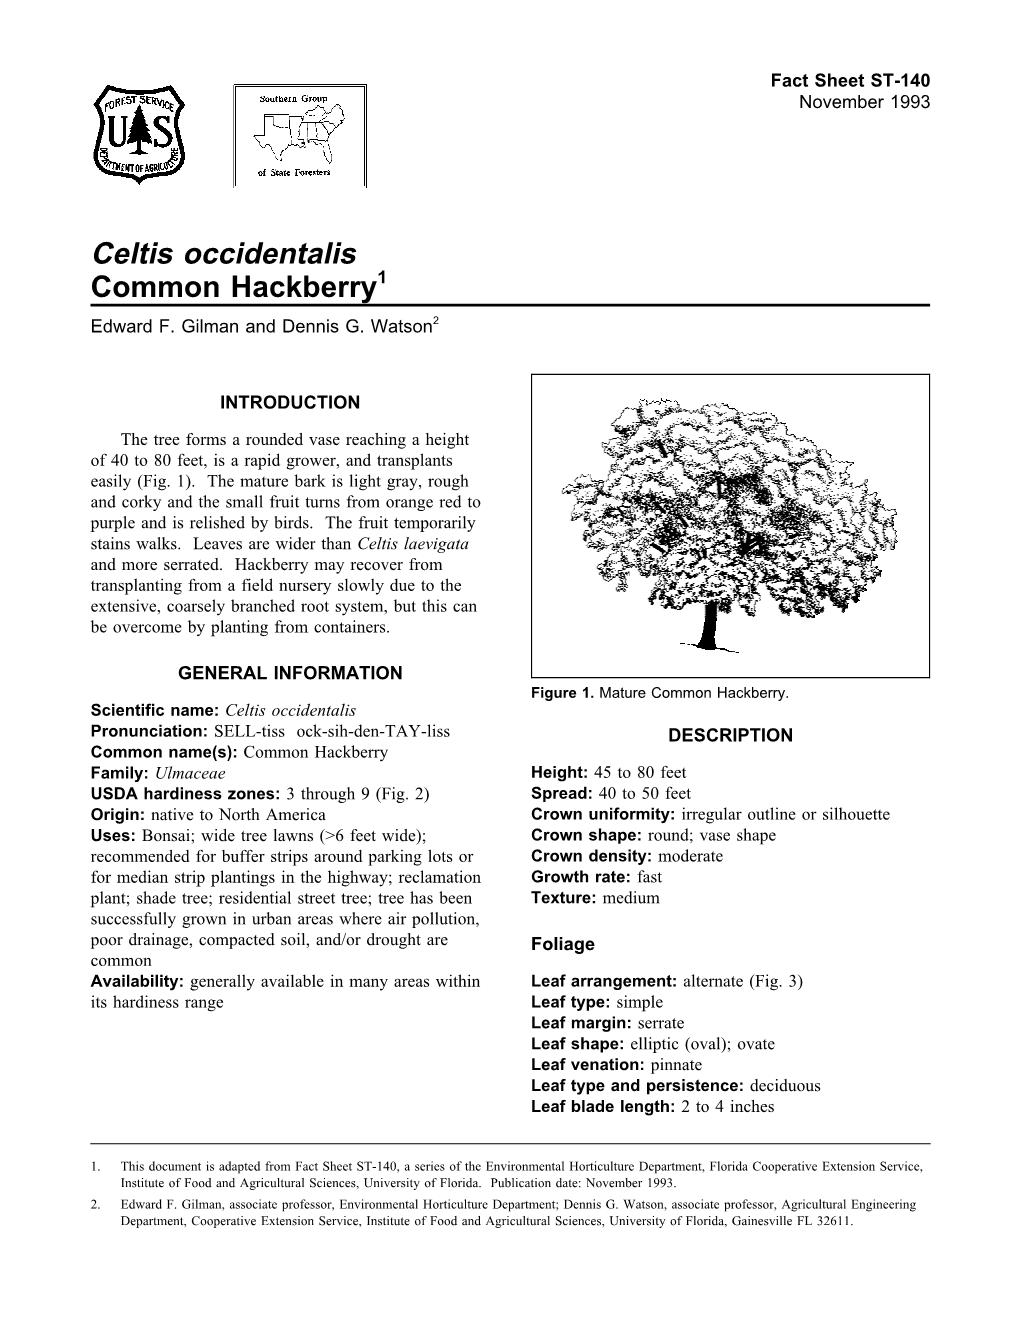 Celtis Occidentalis Common Hackberry1 Edward F